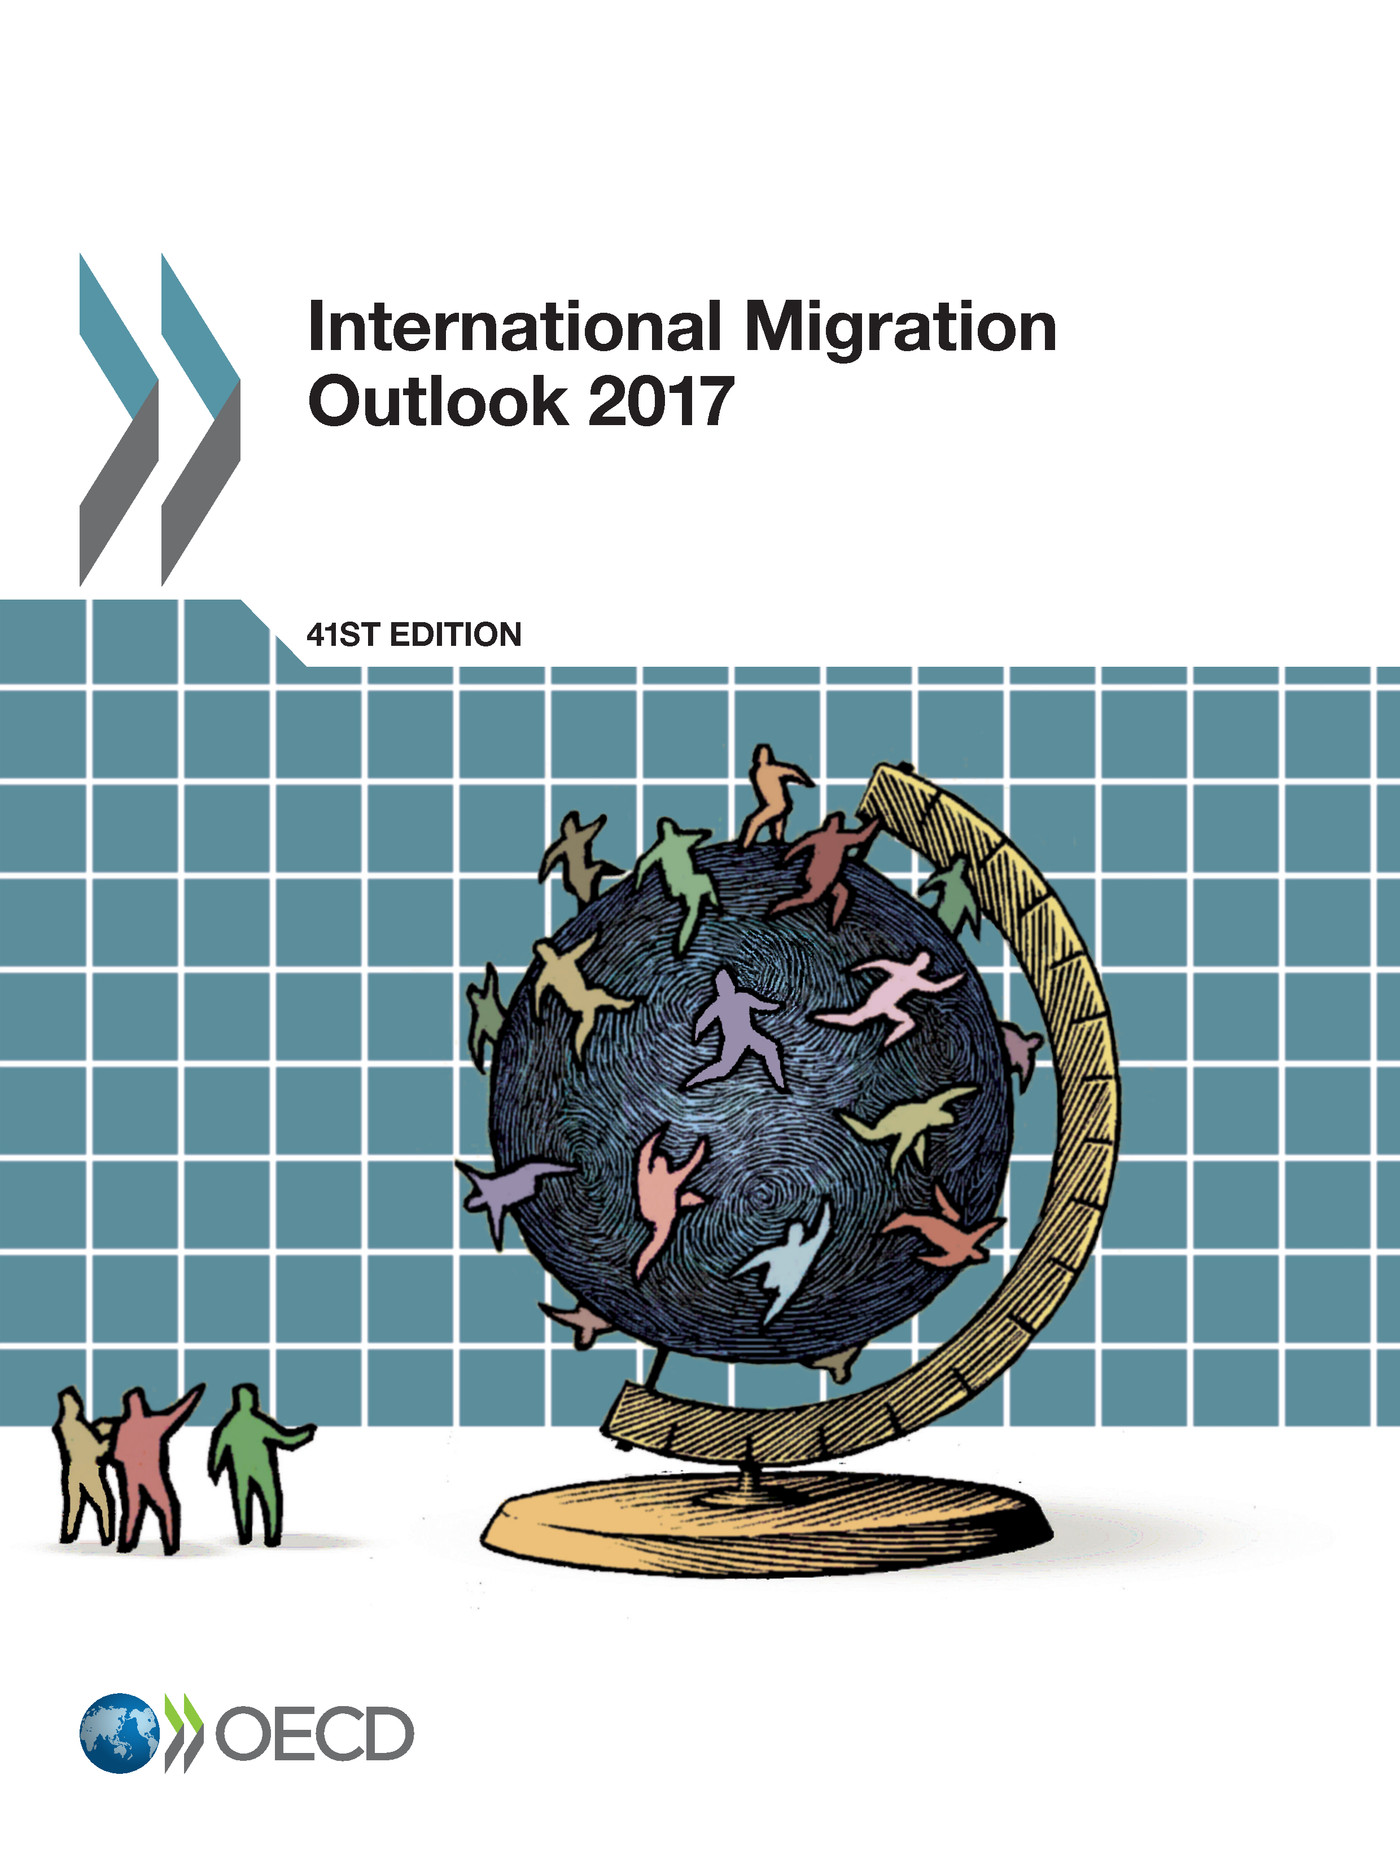 International Migration Outlook 2017 -  Collectif - OCDE / OECD